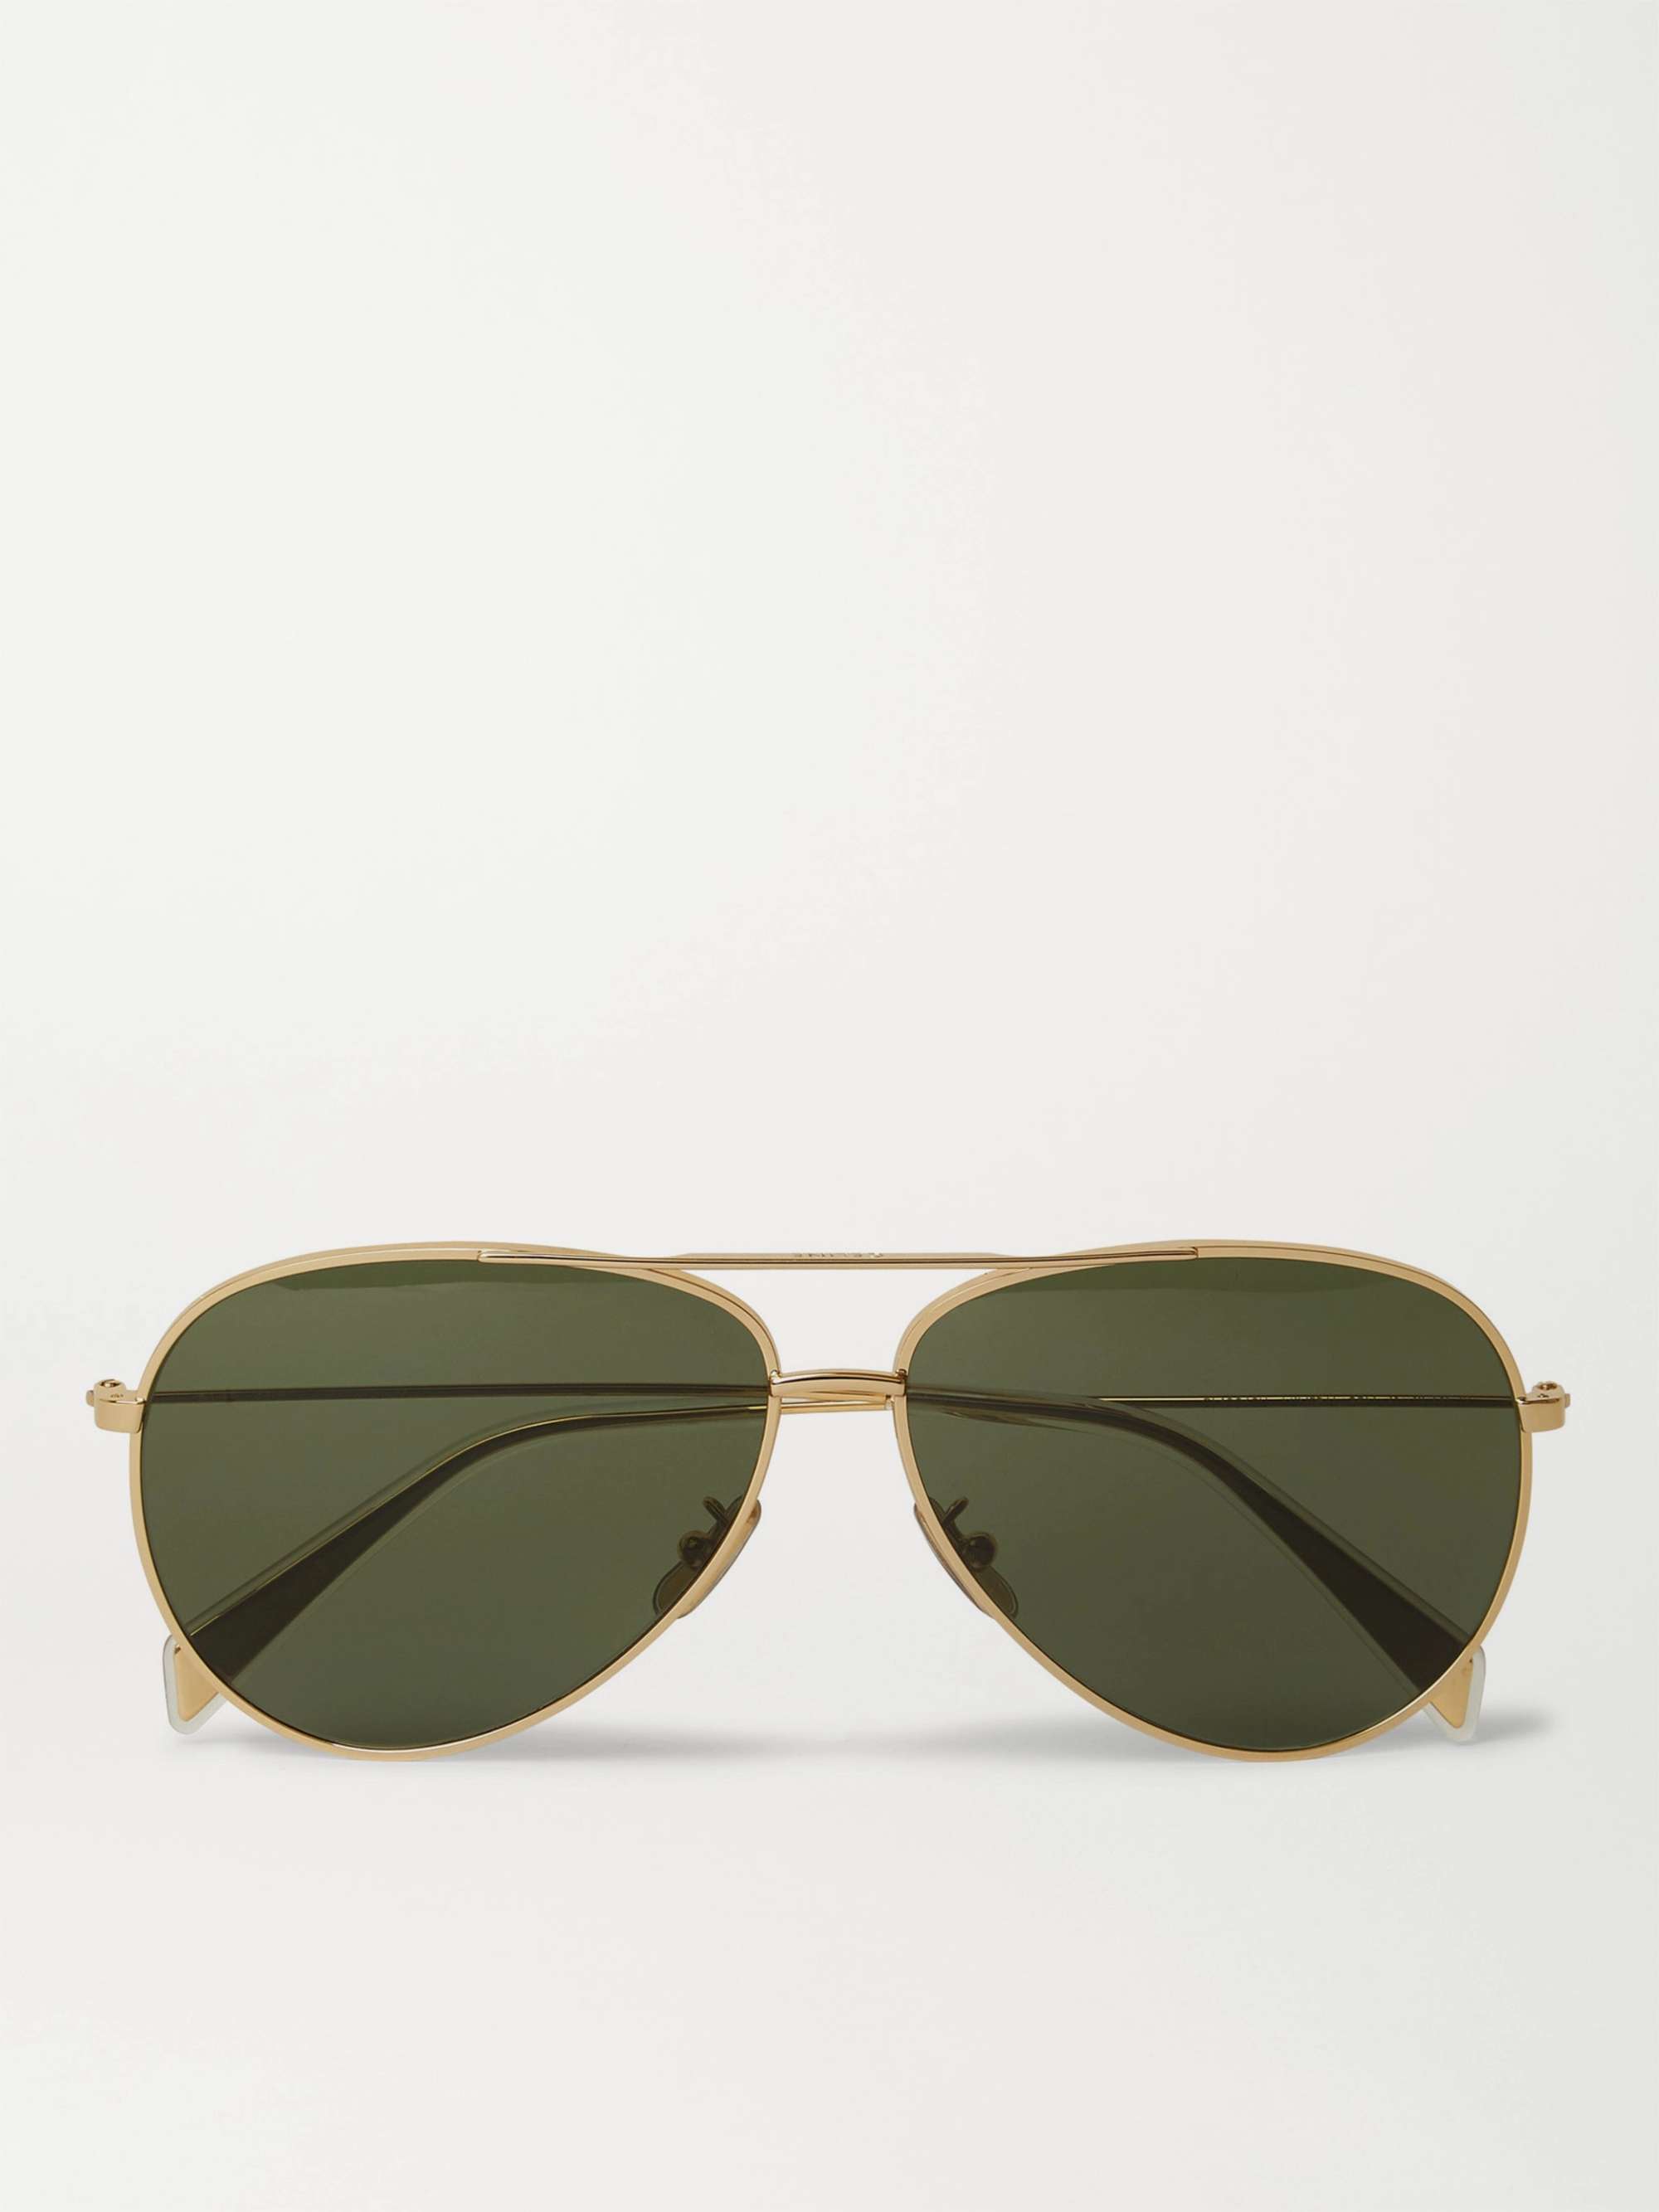 Sunglasses aviator